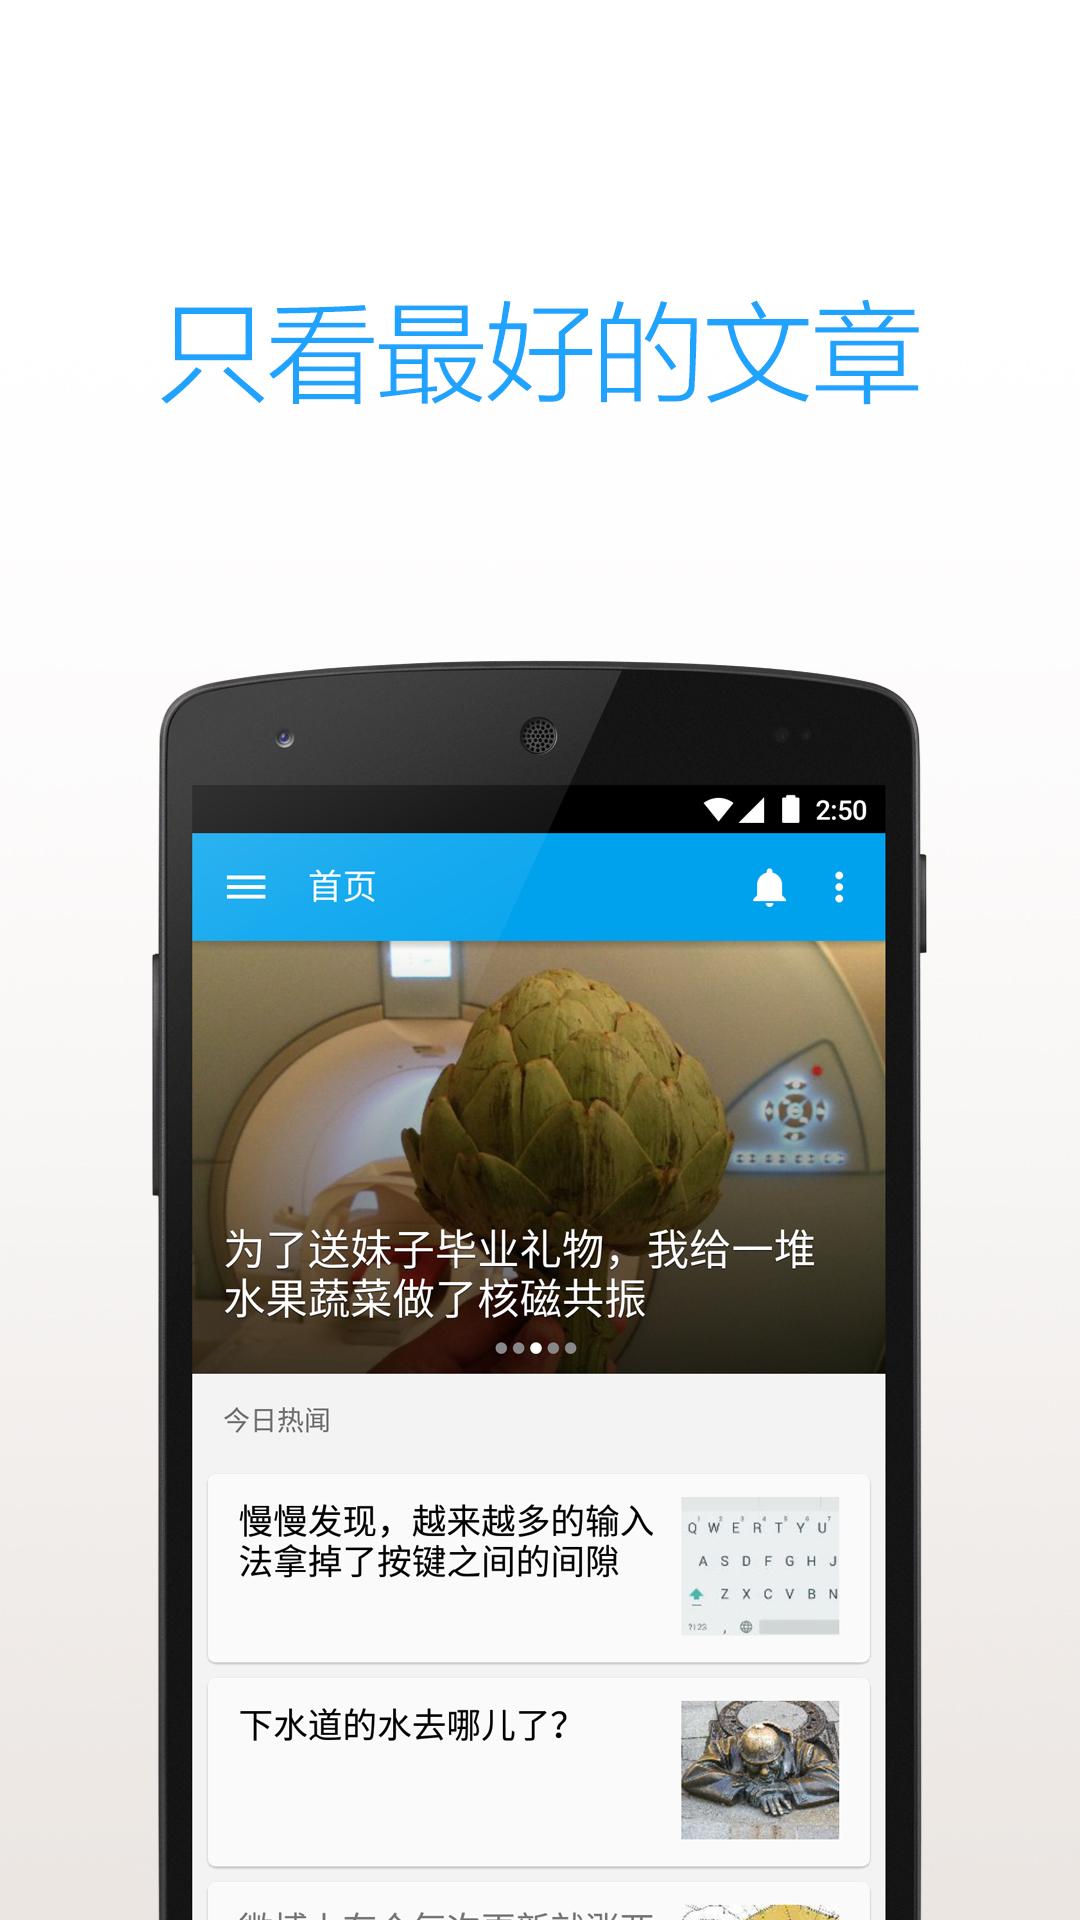 Android application 知乎日报,每日提供高质量新闻资讯 screenshort